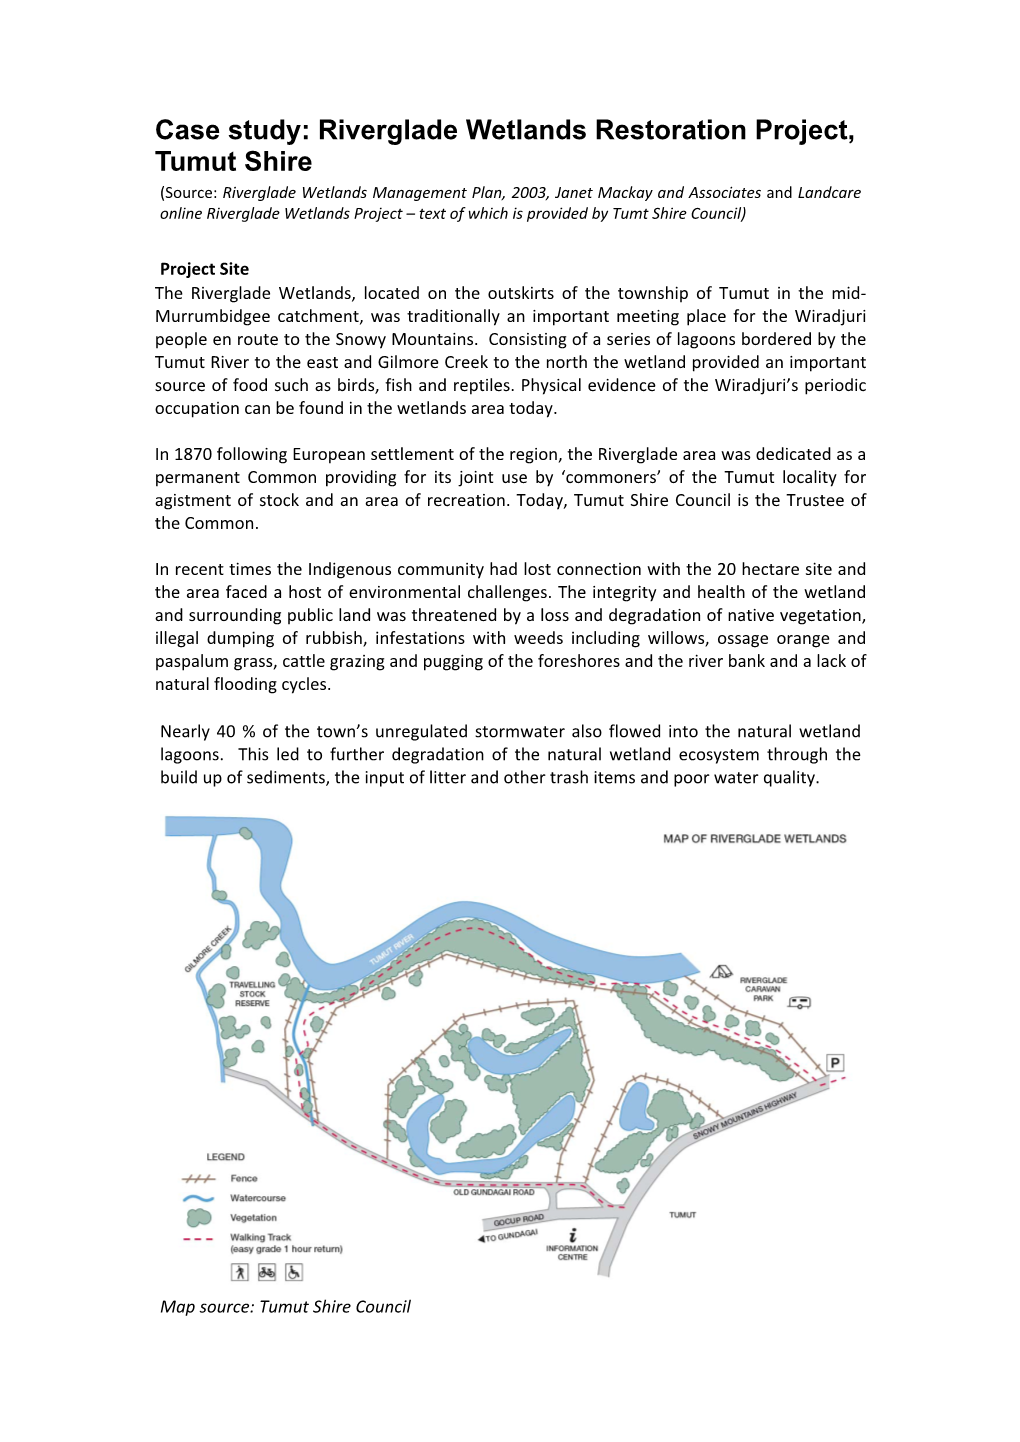 Case Study: Riverglade Wetlands Restoration Project, Tumut Shire